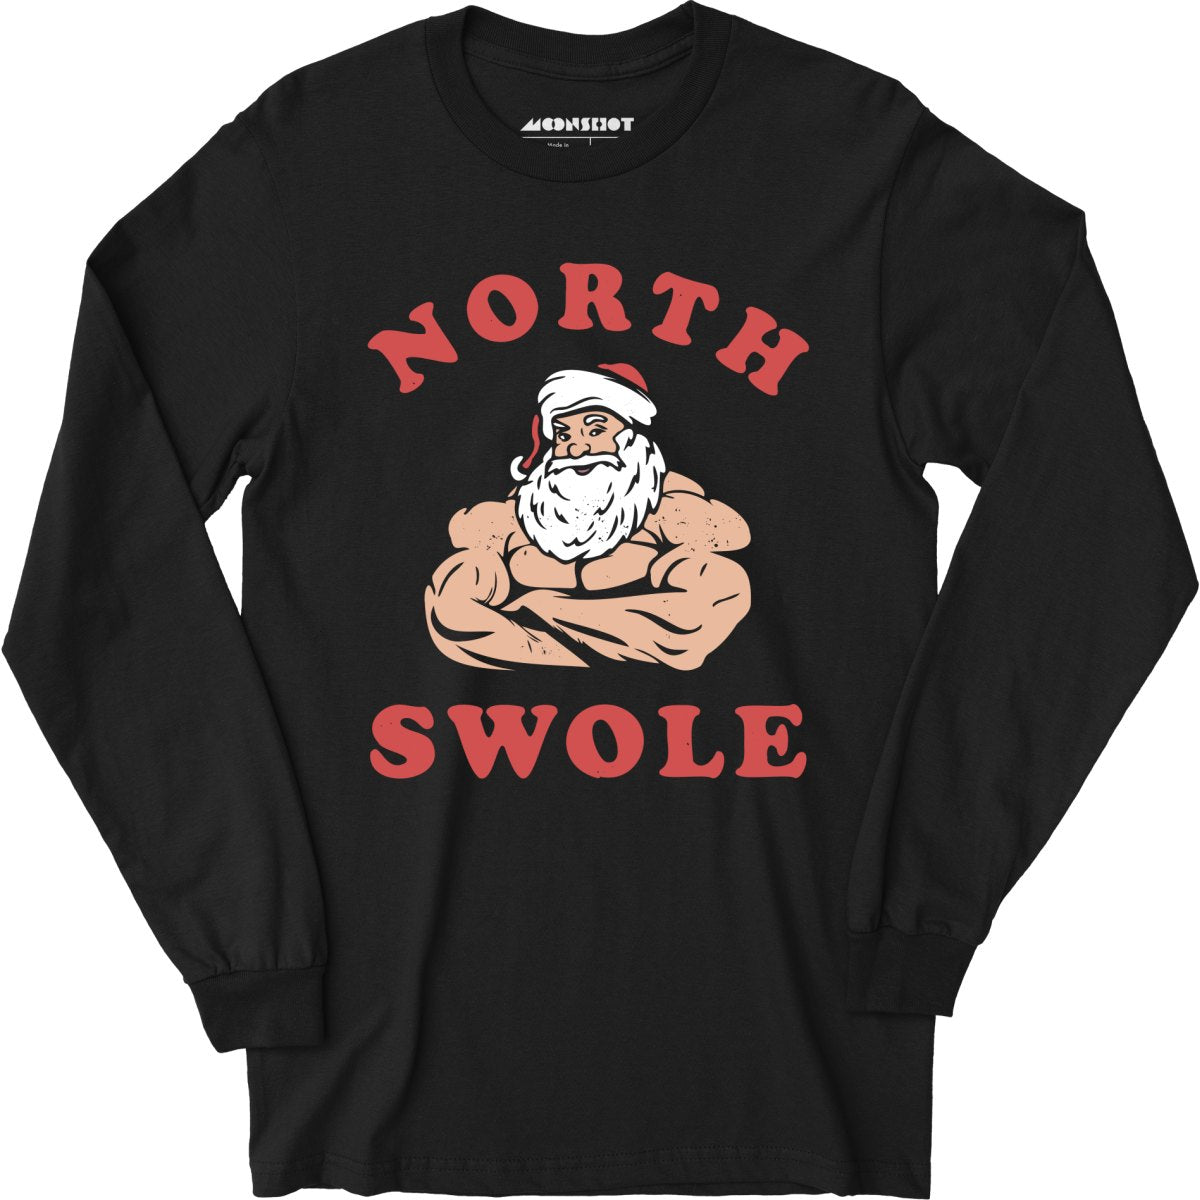 North Swole - Long Sleeve T-Shirt